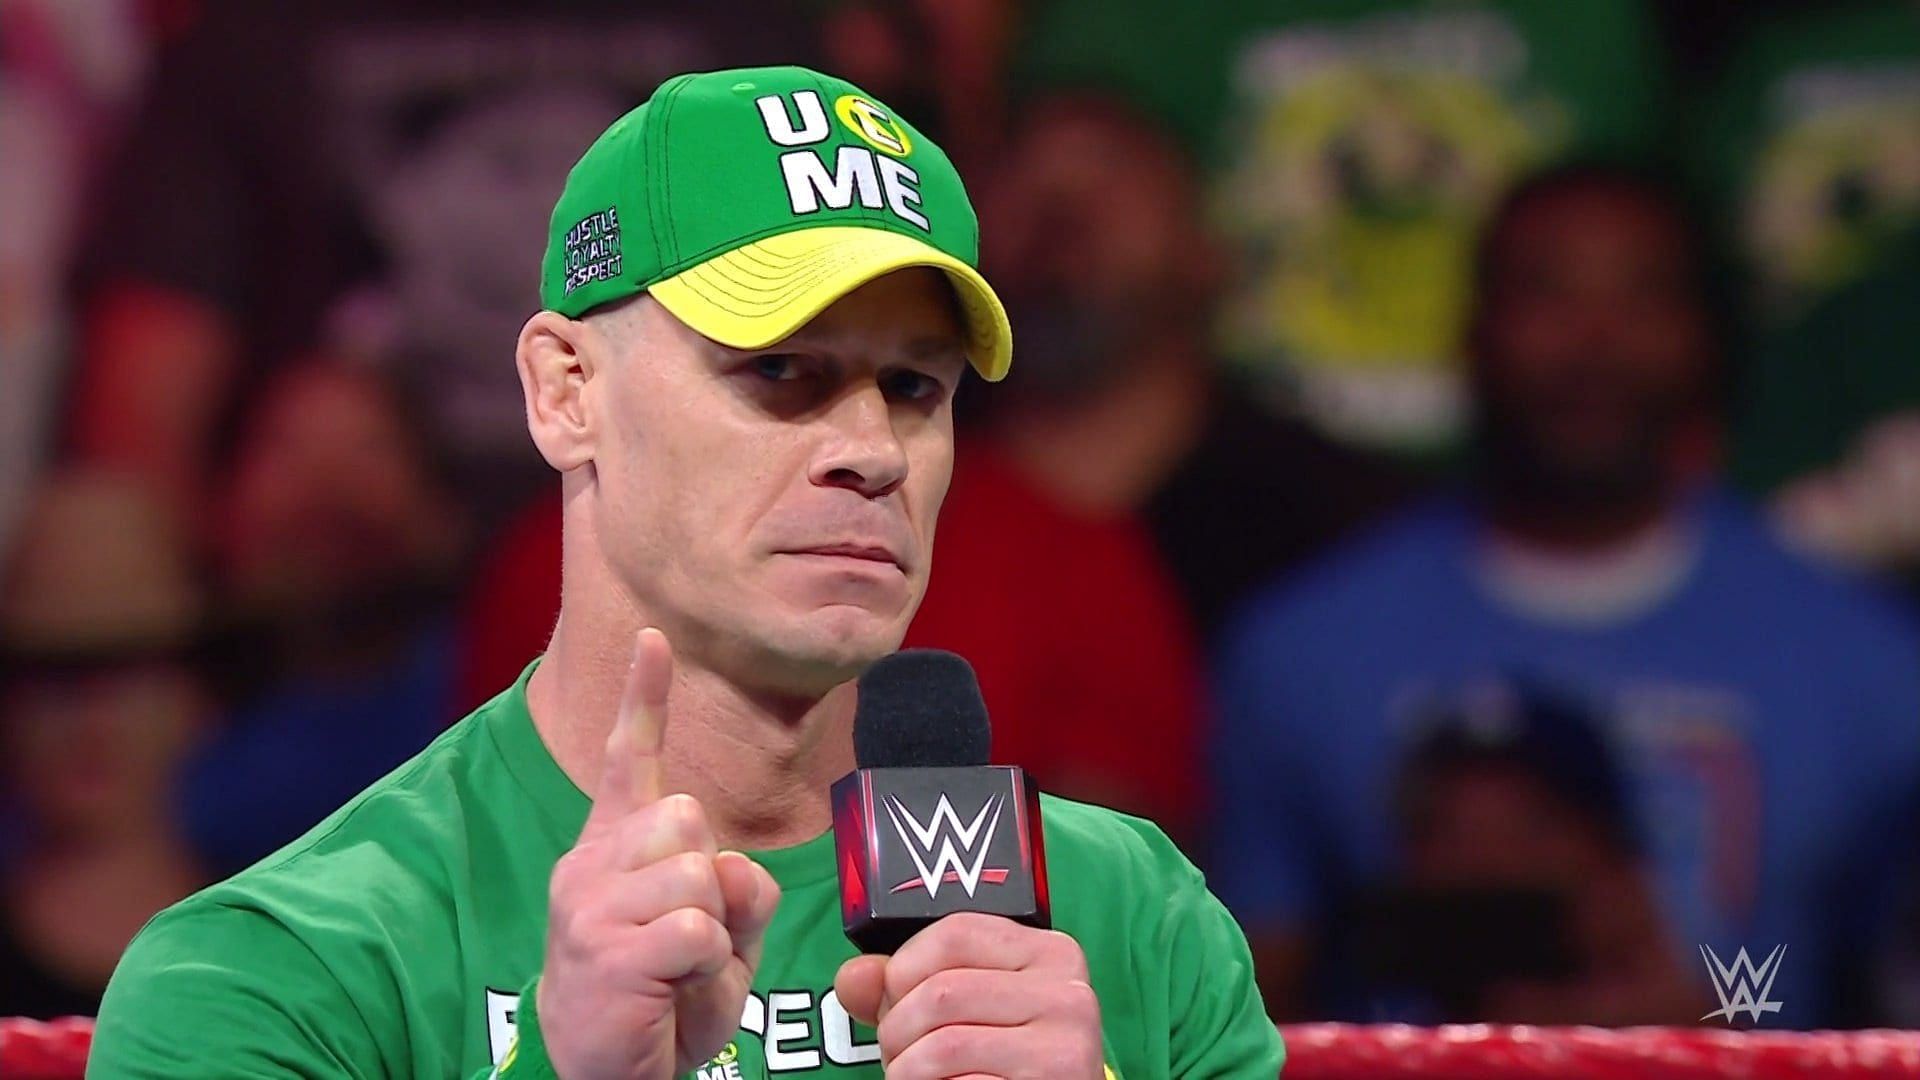 John Cena addresses the crowd in WWE